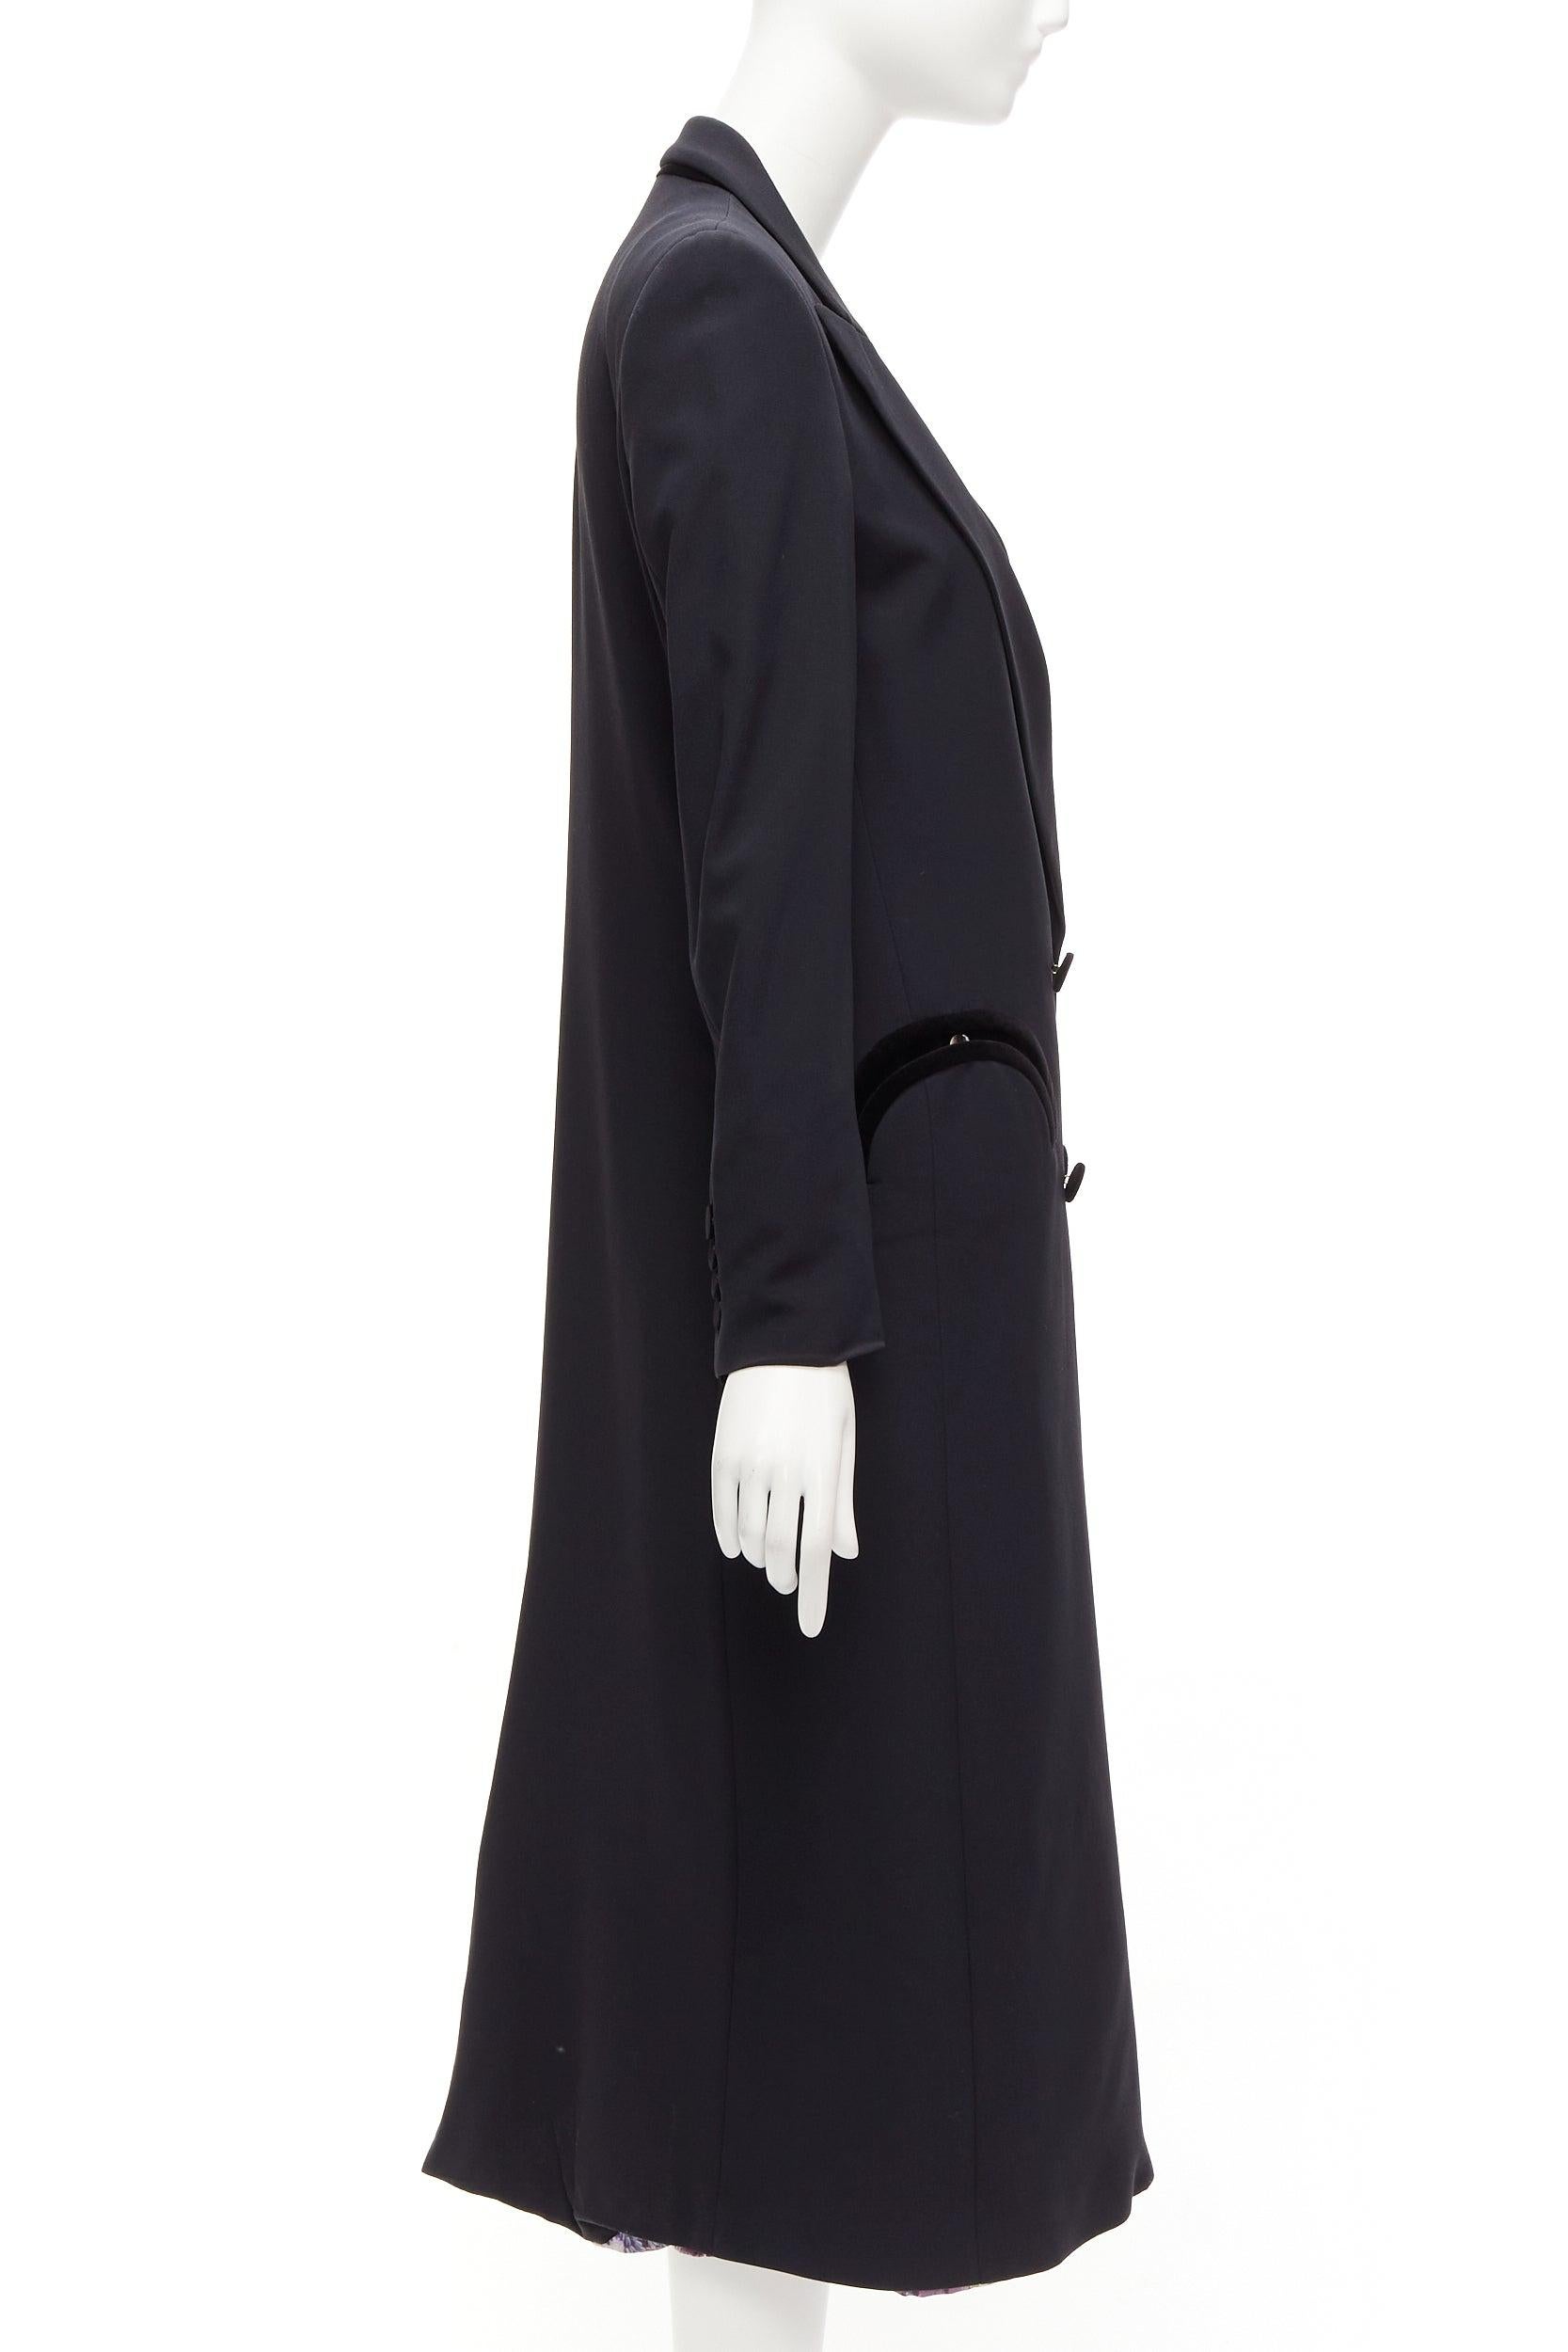 BLAZE MILANO Blazer Dress black curved pockets double breasted coat Sz.1 XS For Sale 1